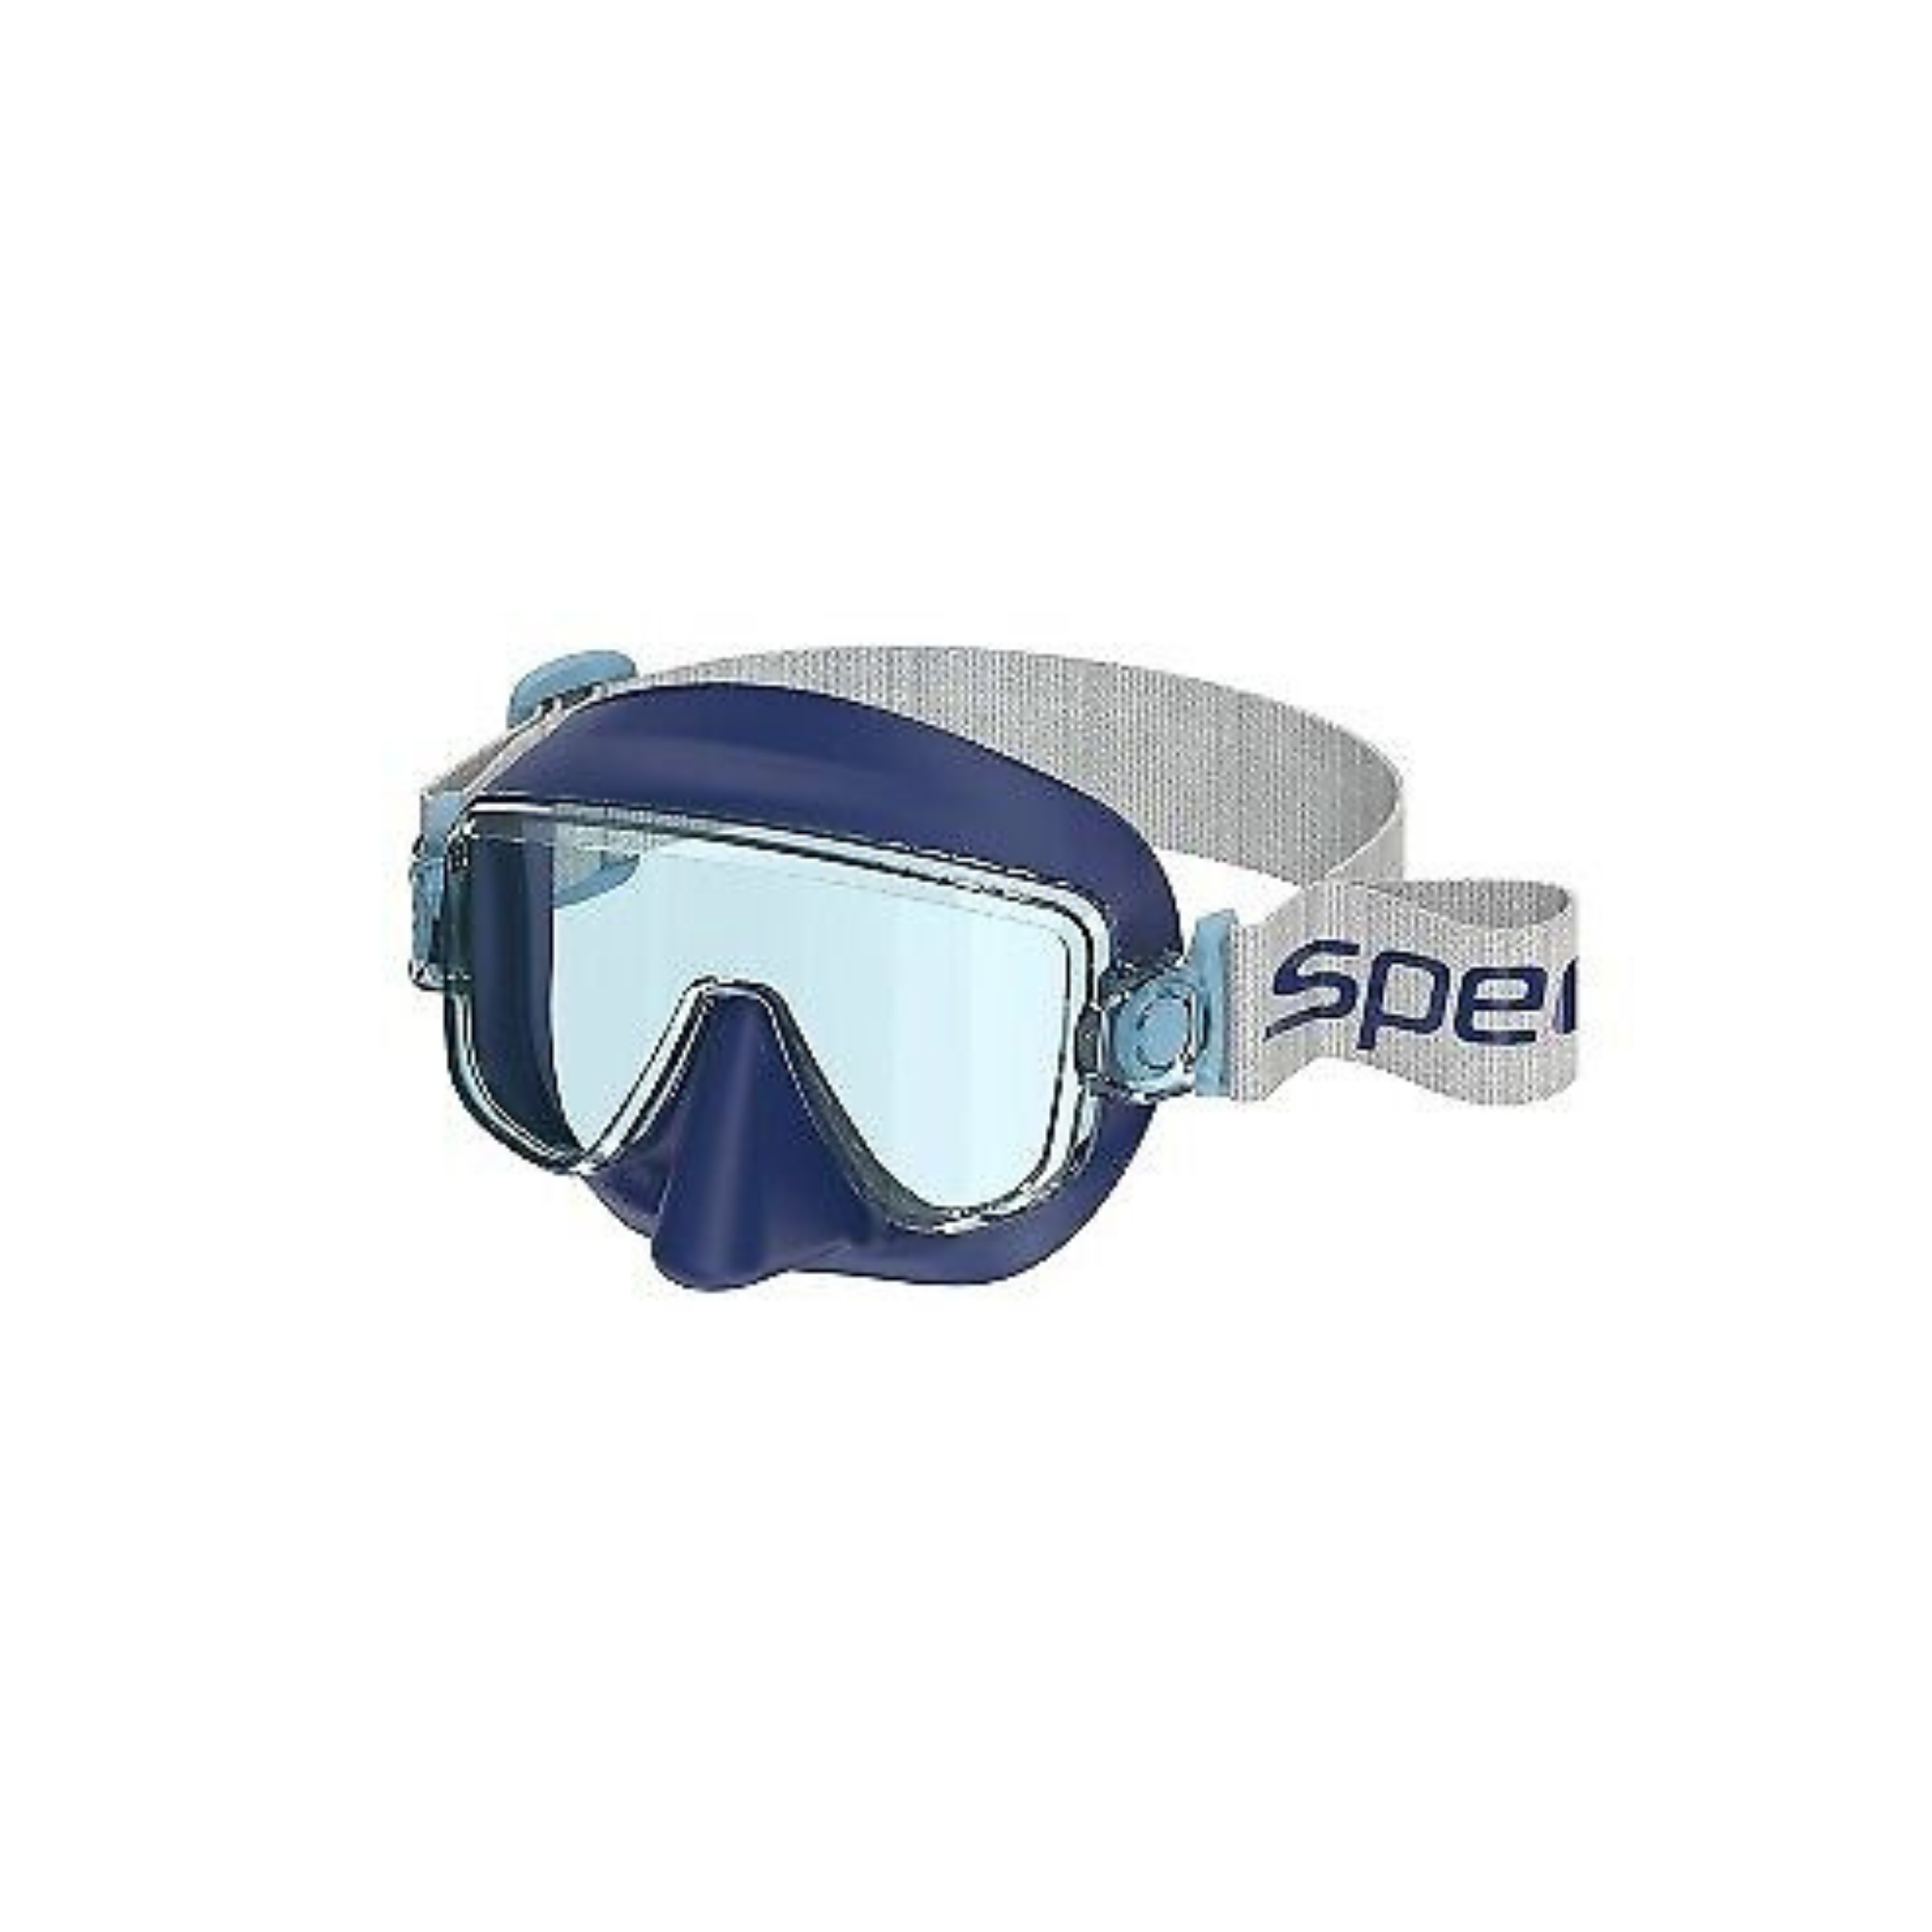 Speedo Adult Travel Snorkel Mask Set (Navy)